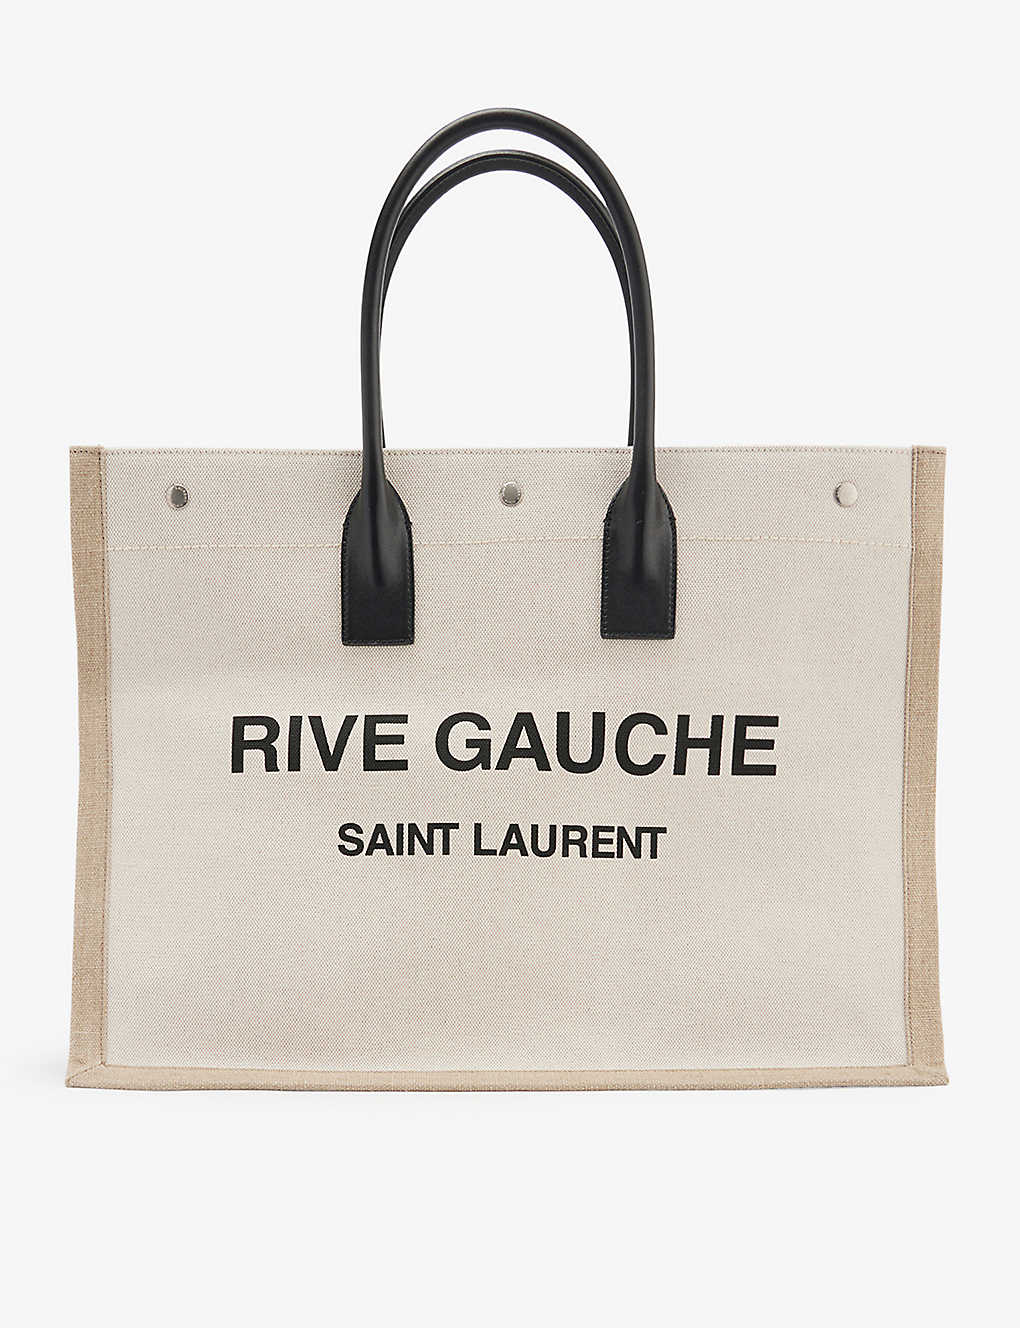 Saint Laurent Rive Gauche Cotton And Linen Tote Bag In Cream/black